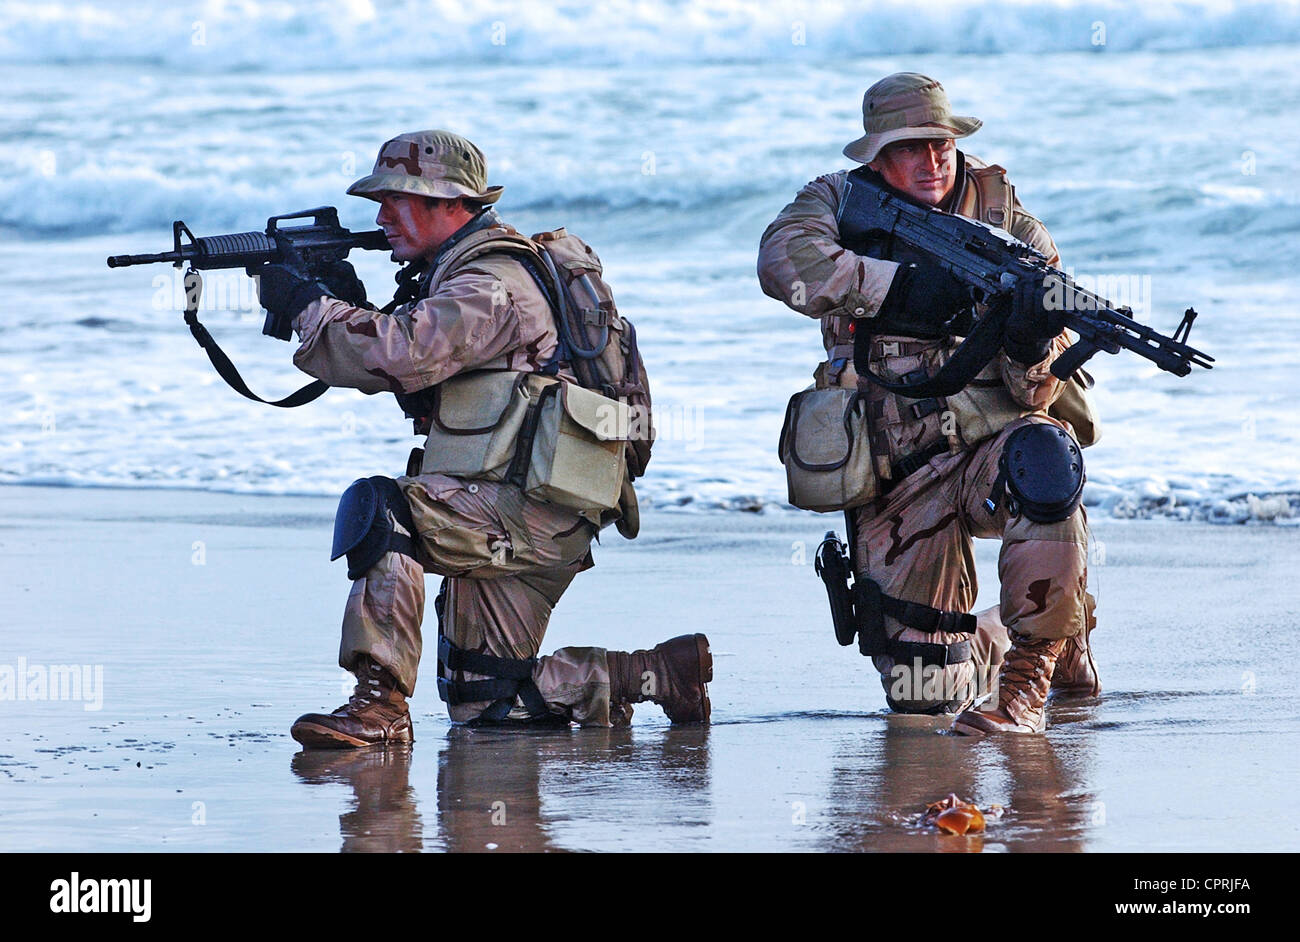 US Navy SEALs practice beach landings during combat training Stock Photo